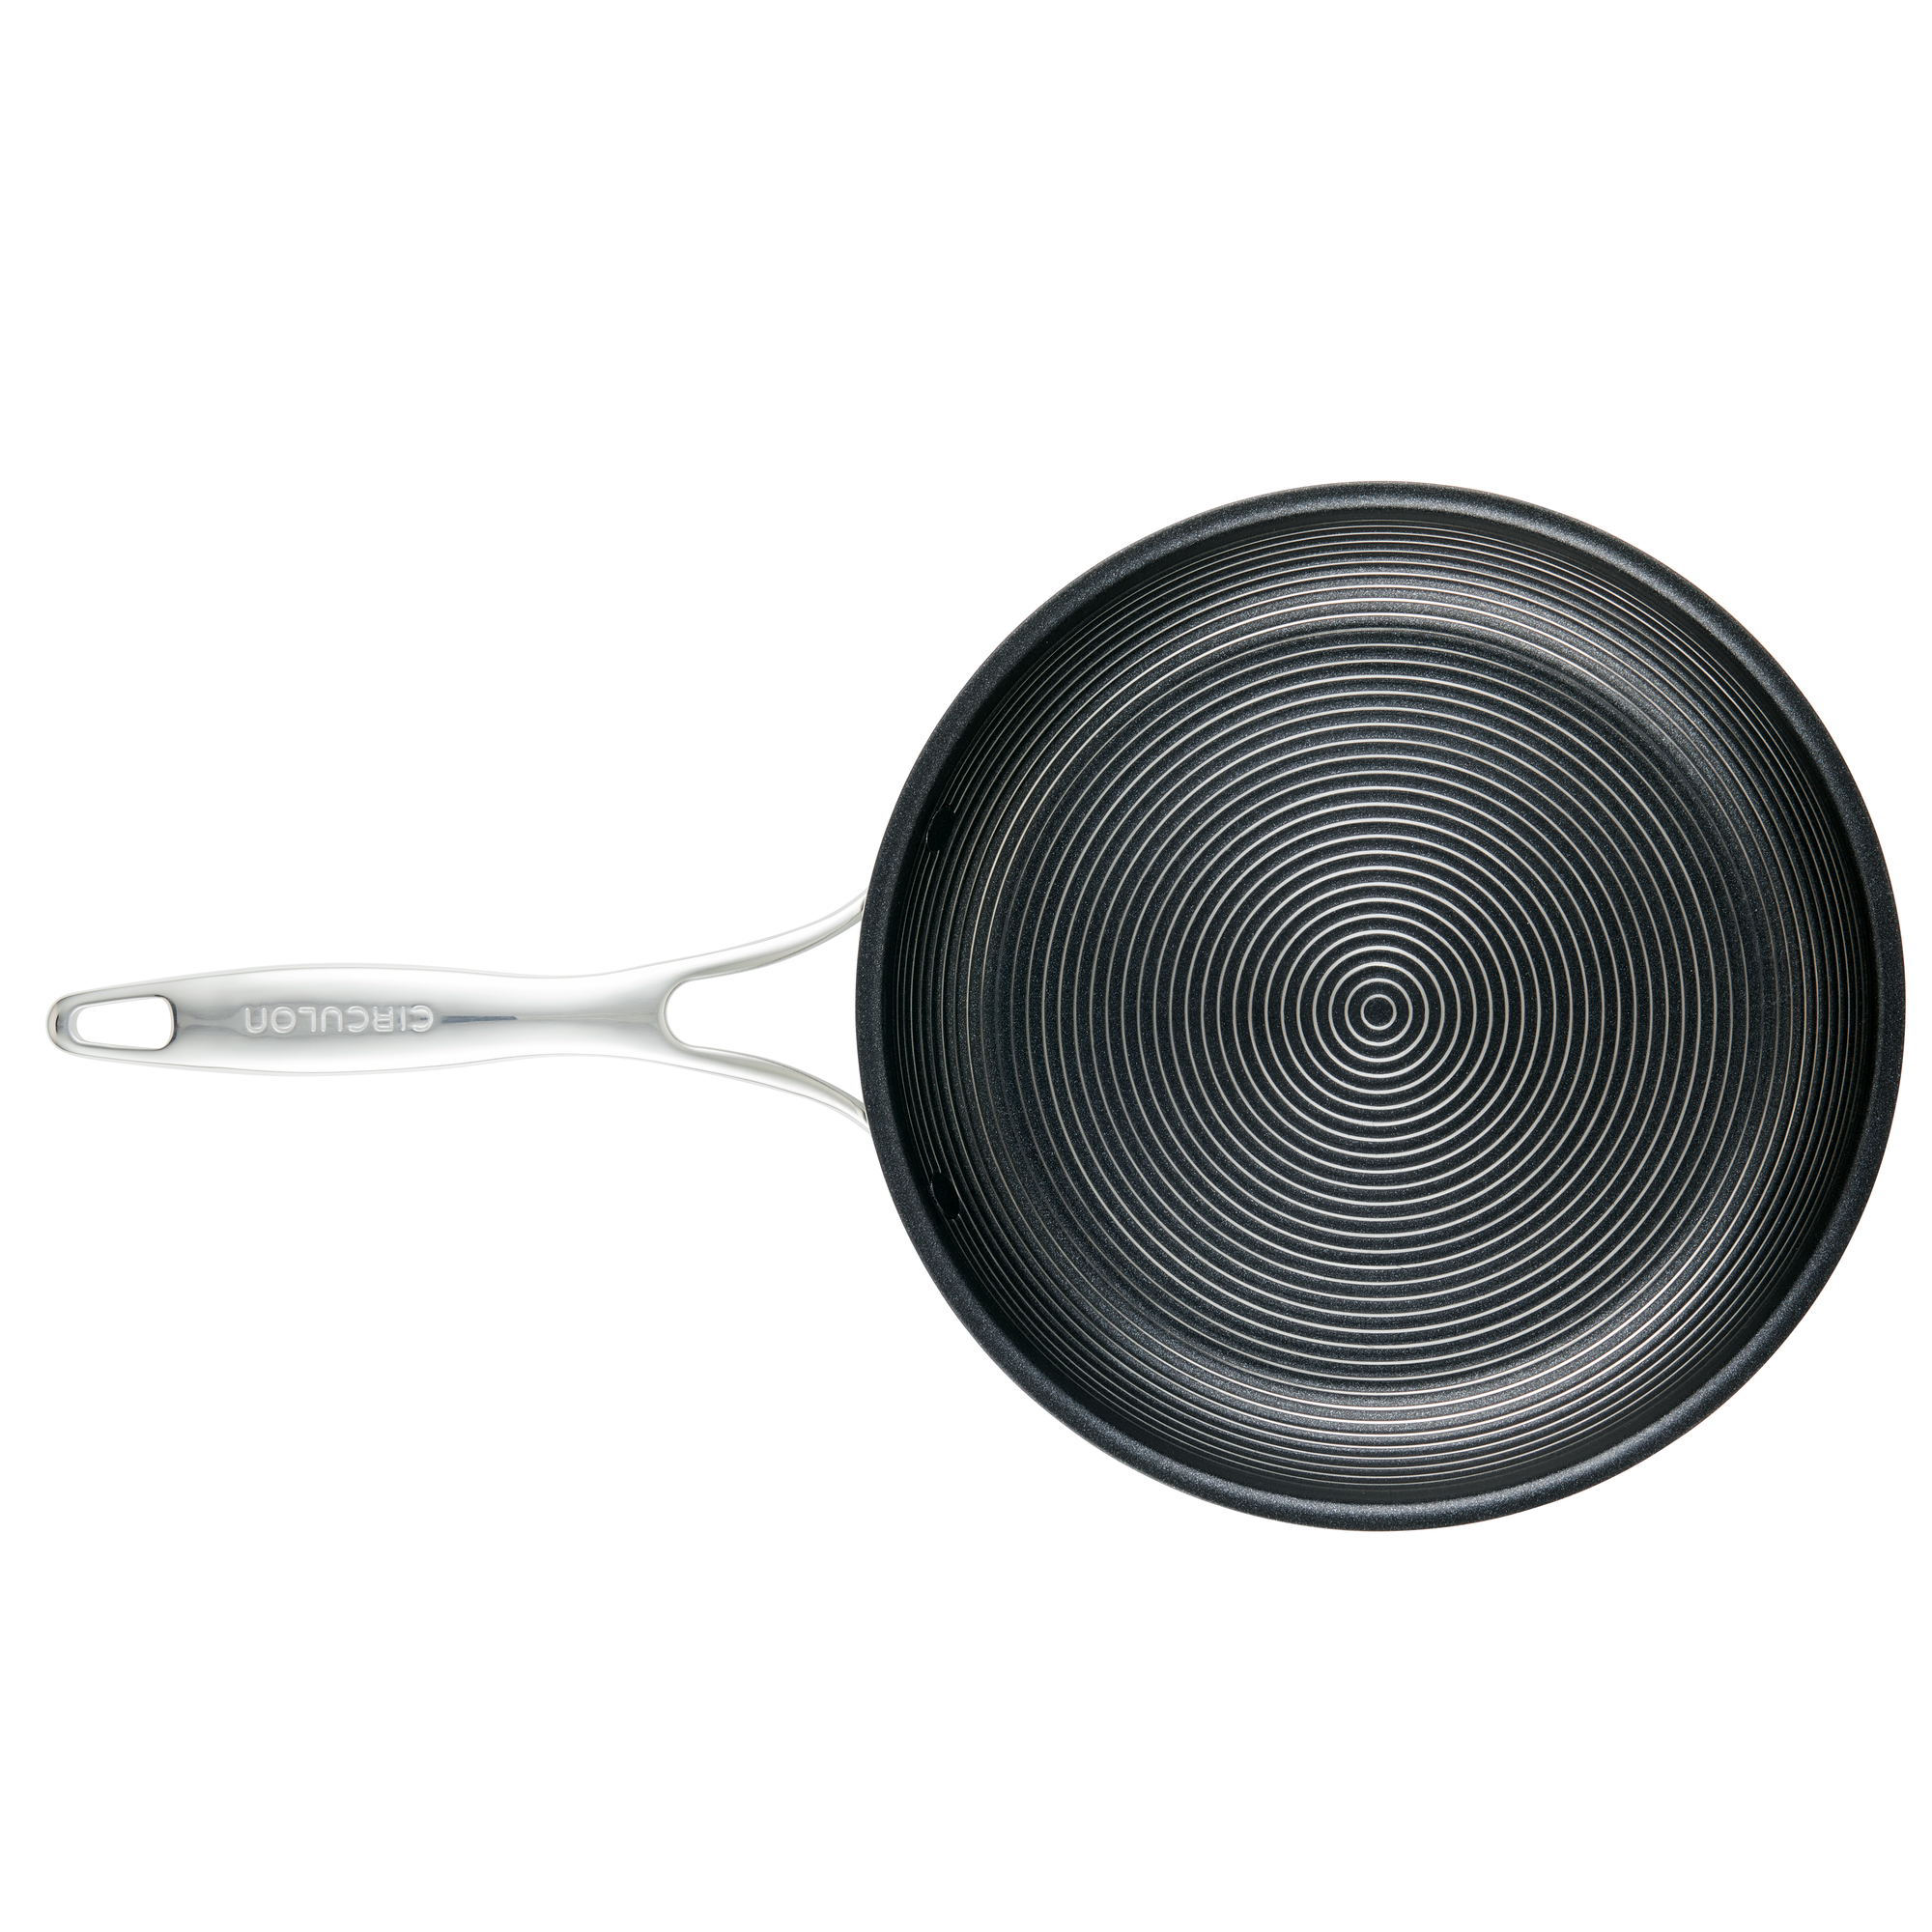 Circulon Cookware 8 and 10.25 Nonstick Frying Pan Set in